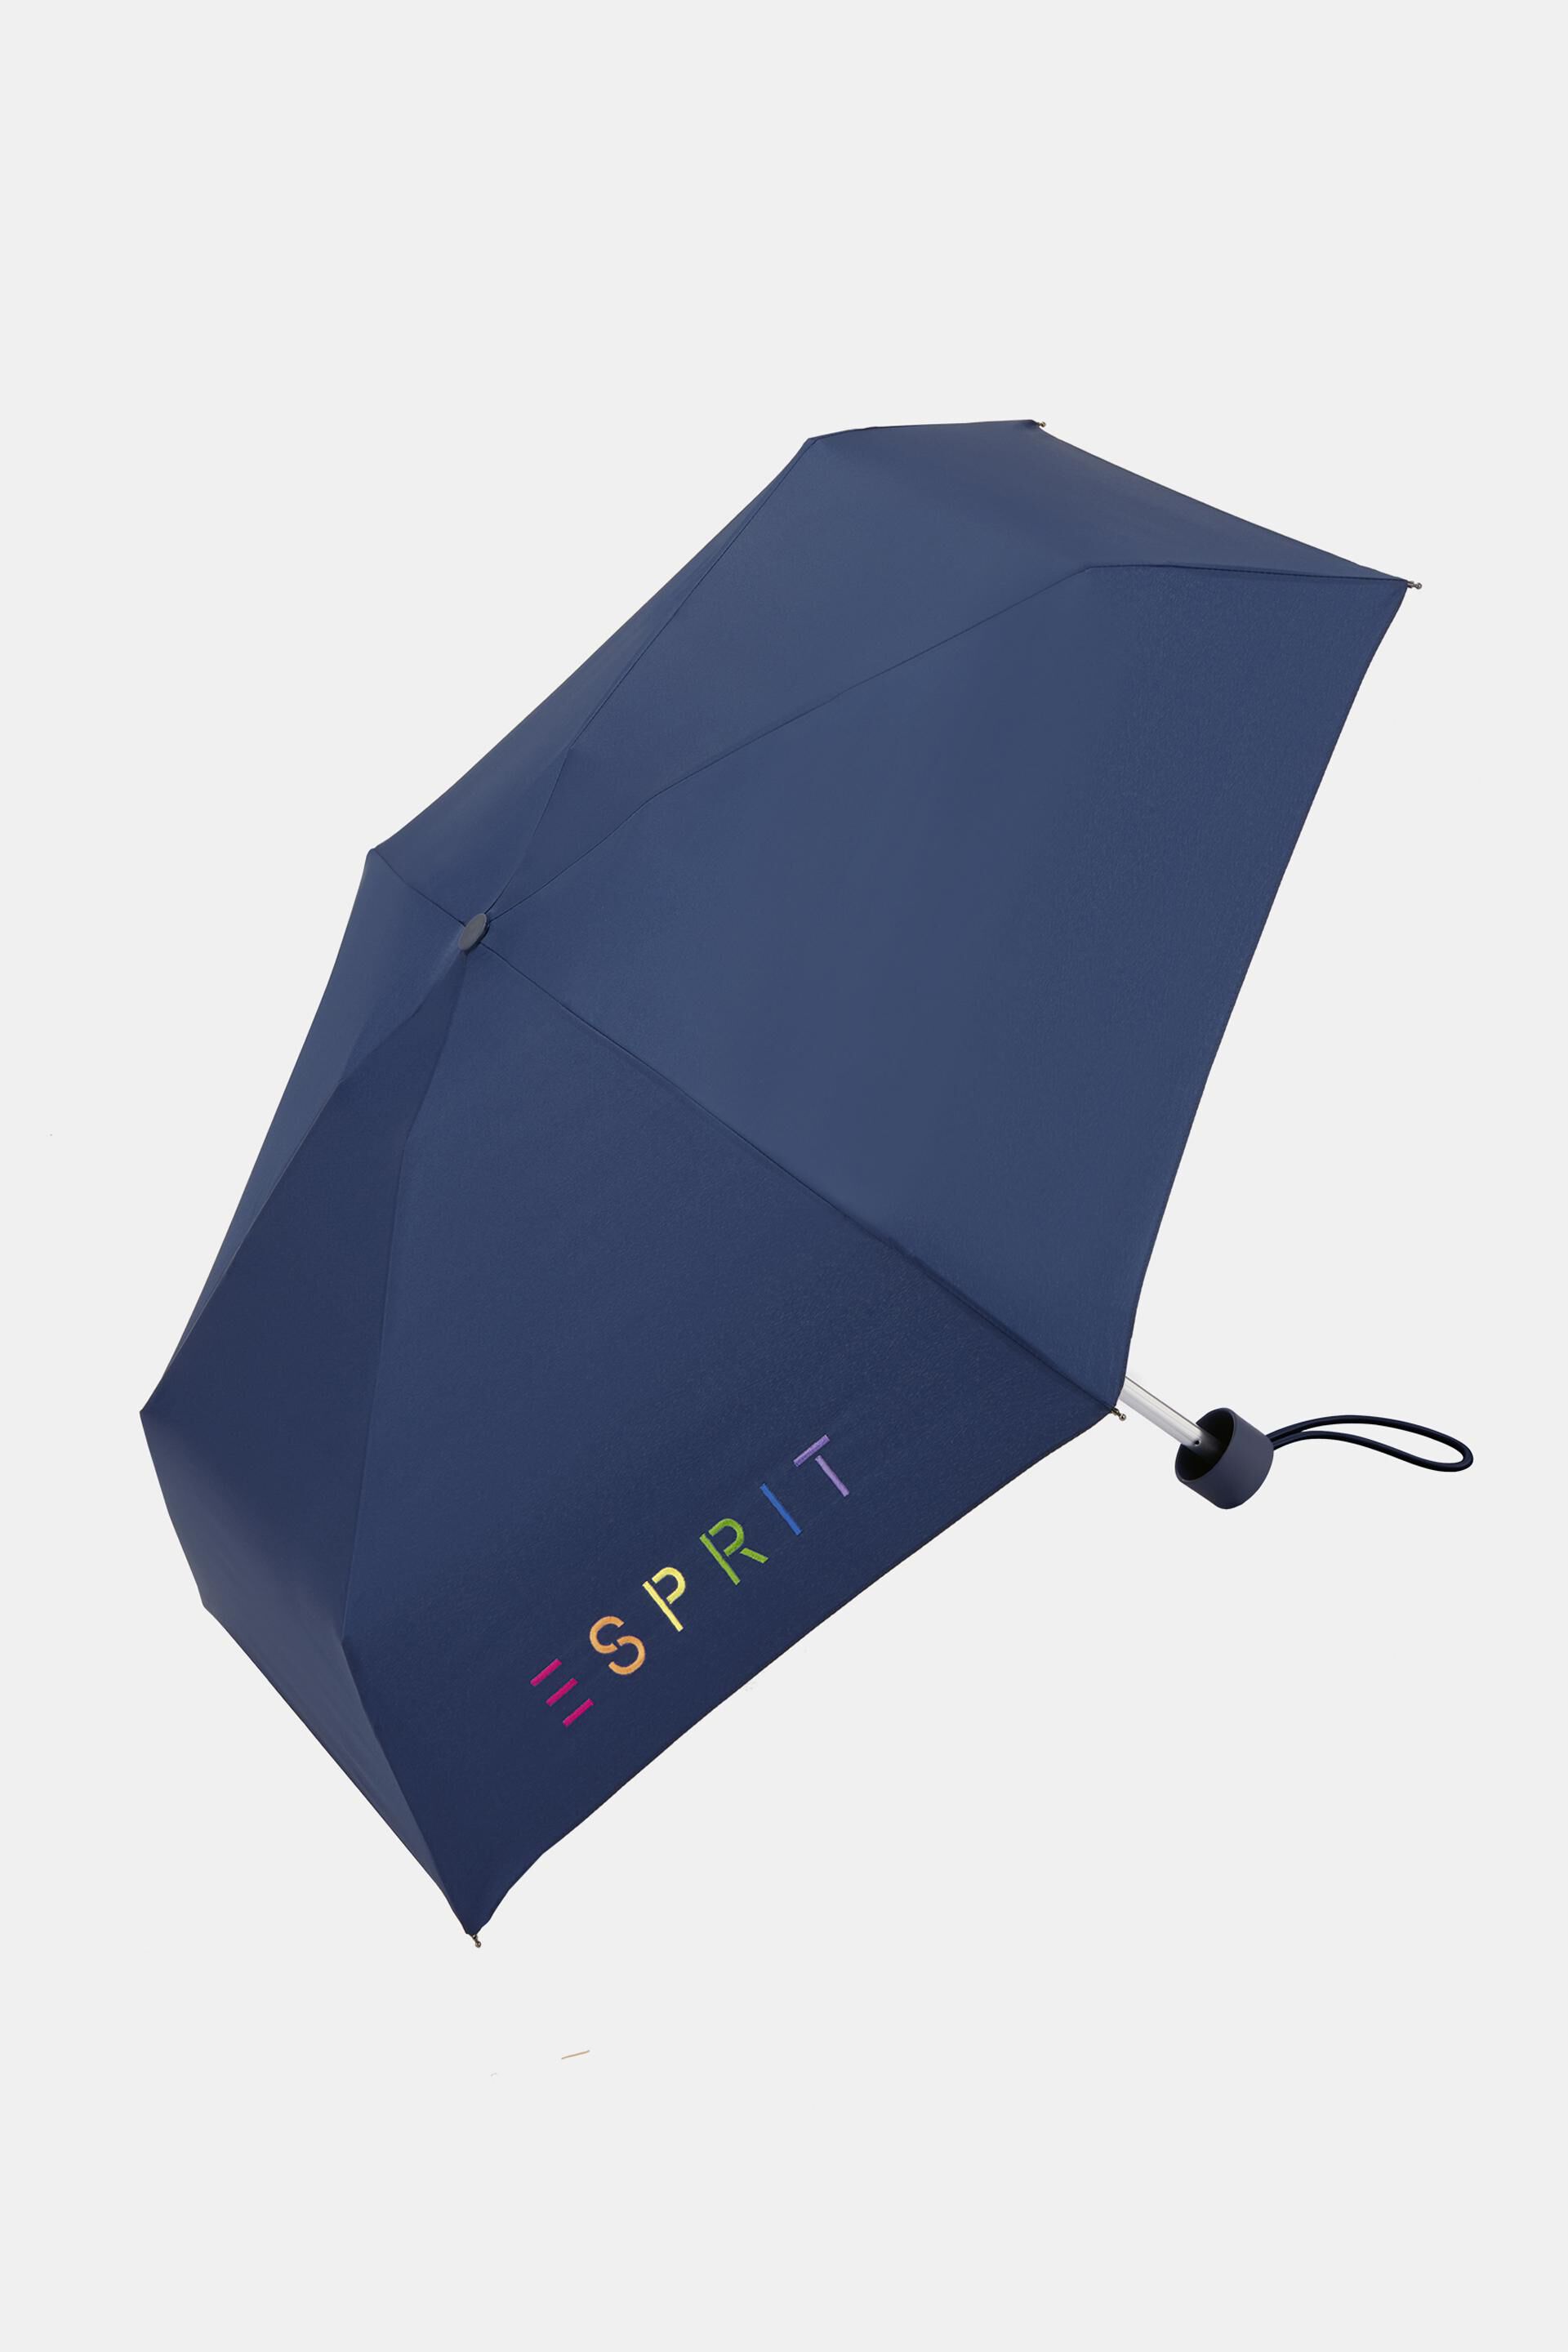 Esprit mini umbrella pocket zip pouch with Ultra